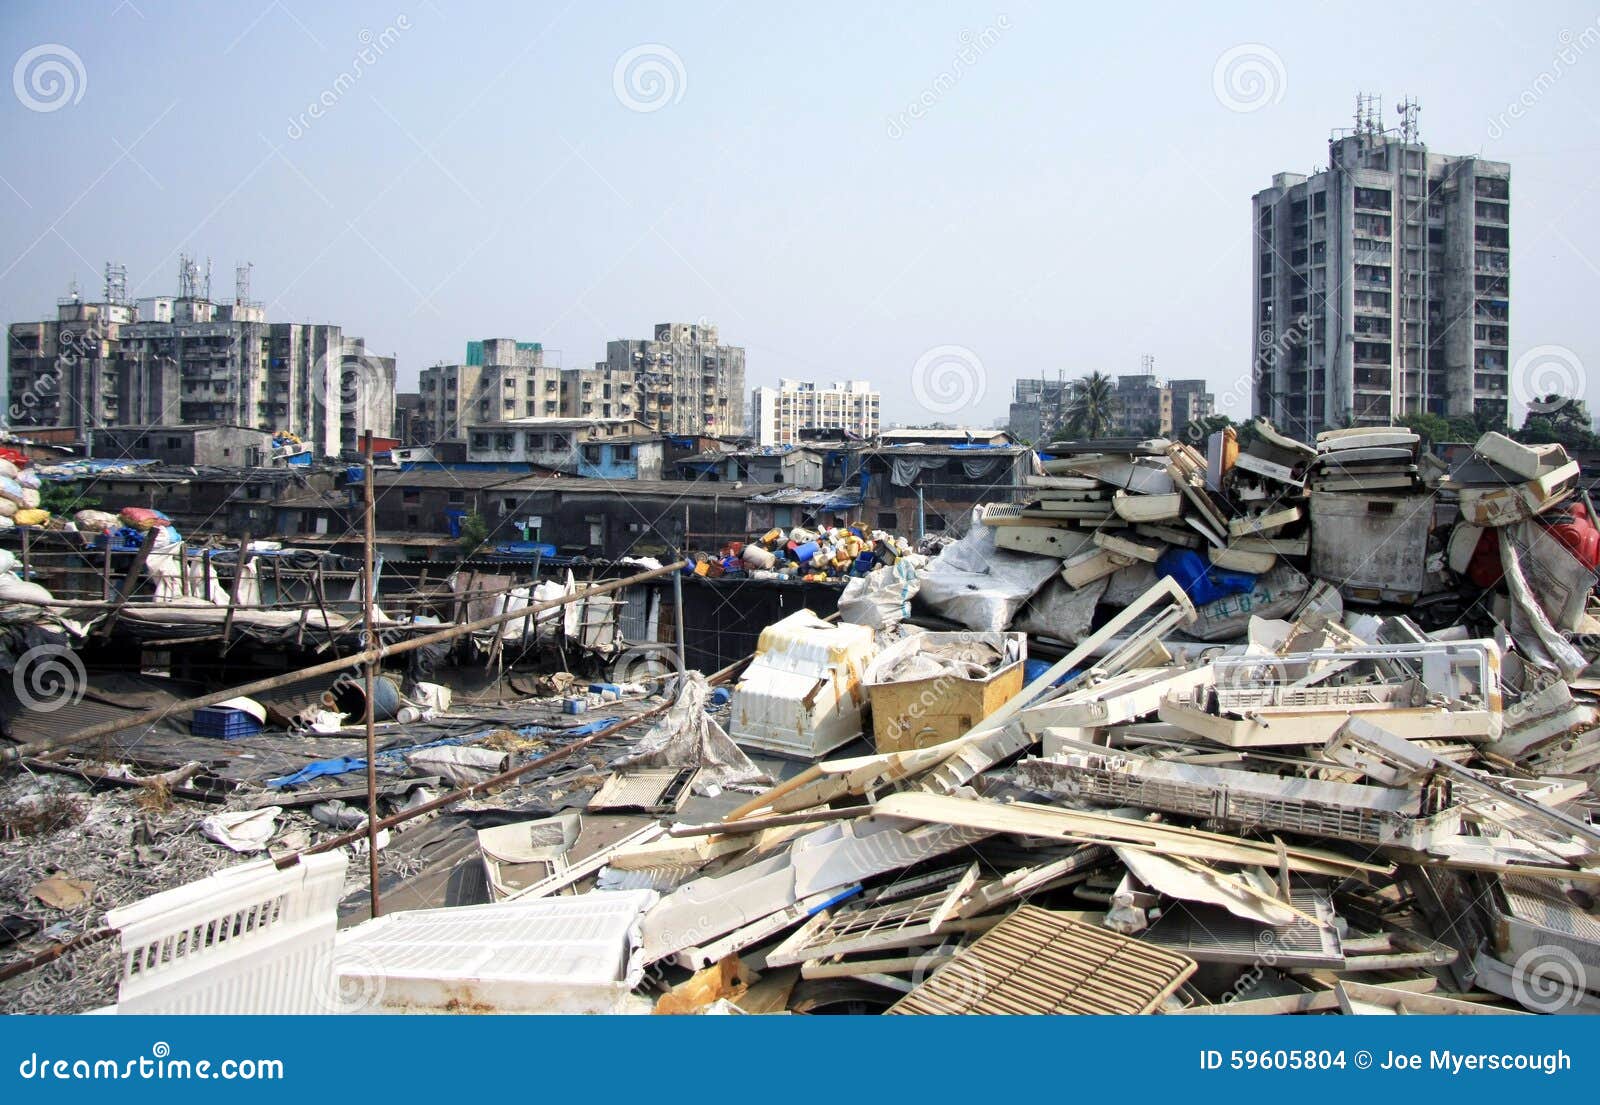 mumbai-rooftop-slums-piled-high-rubbish-mainly-computer-waste-59605804.jpg